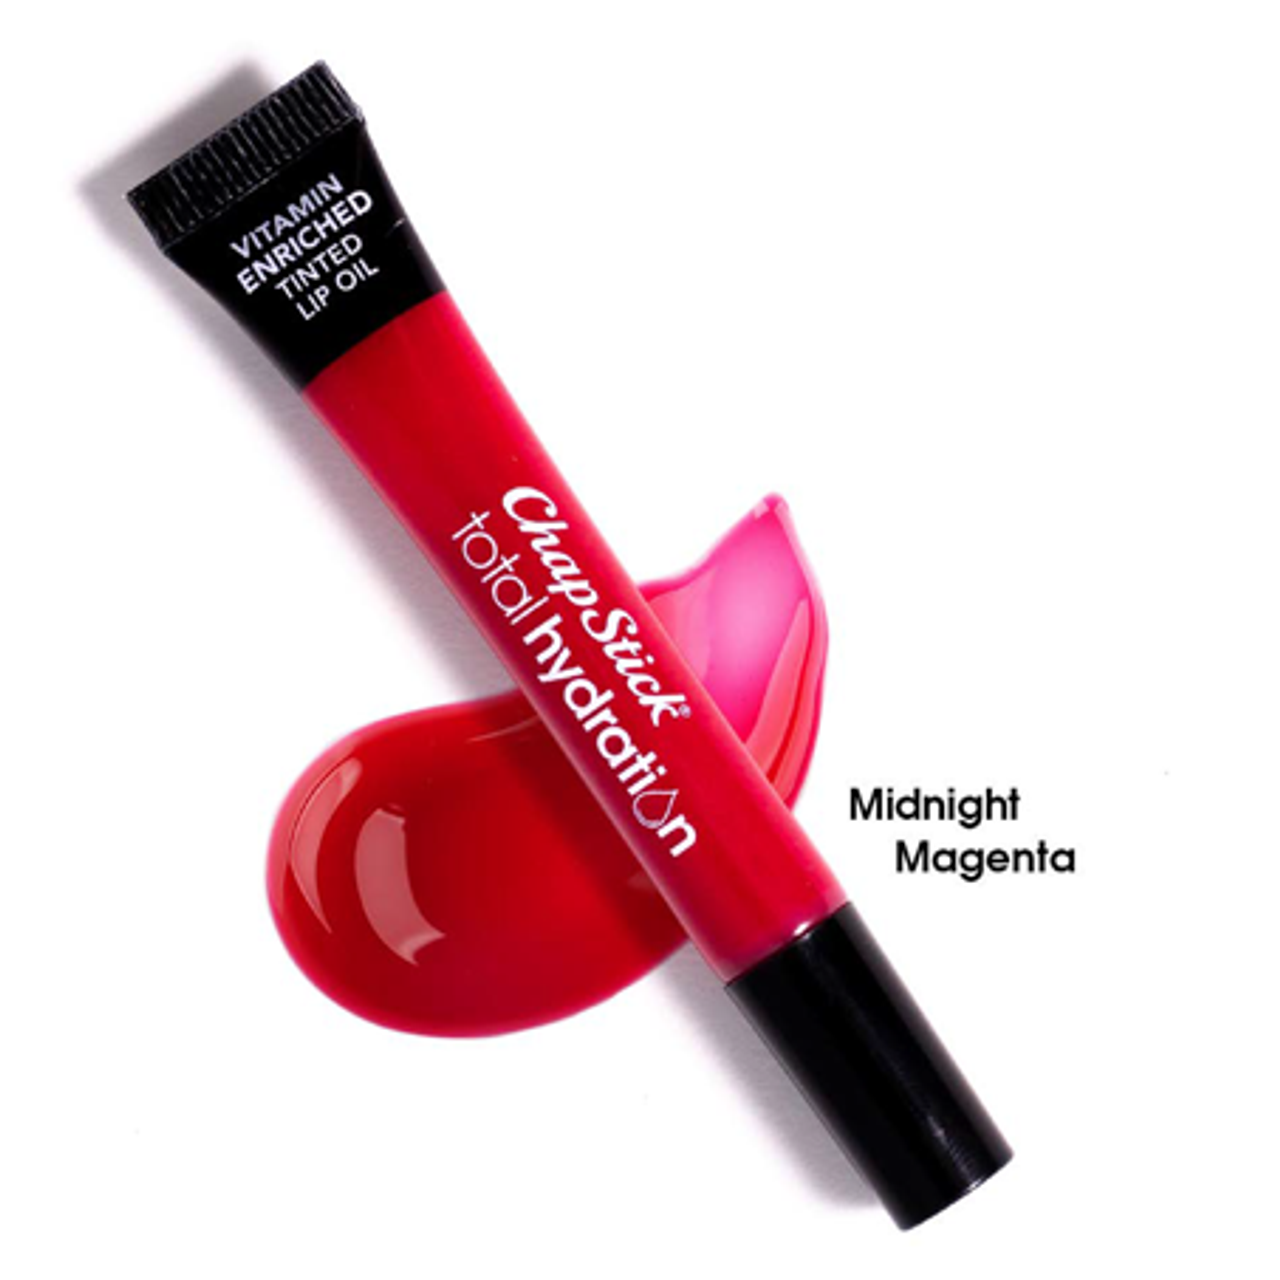 Midnight Magenta Vitamin Enriched Tinted Lip Oil | ChapStick